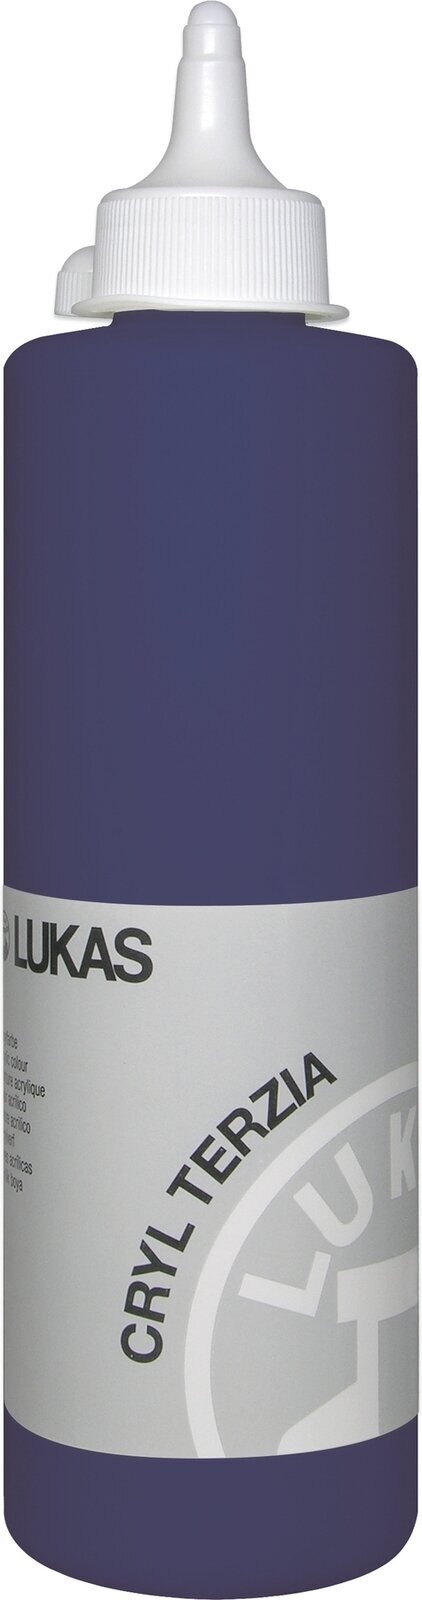 Akrilna barva Lukas Cryl Terzia Acrylic Paint Plastic Bottle Akrilna barva Prussian Blue 500 ml 1 kos